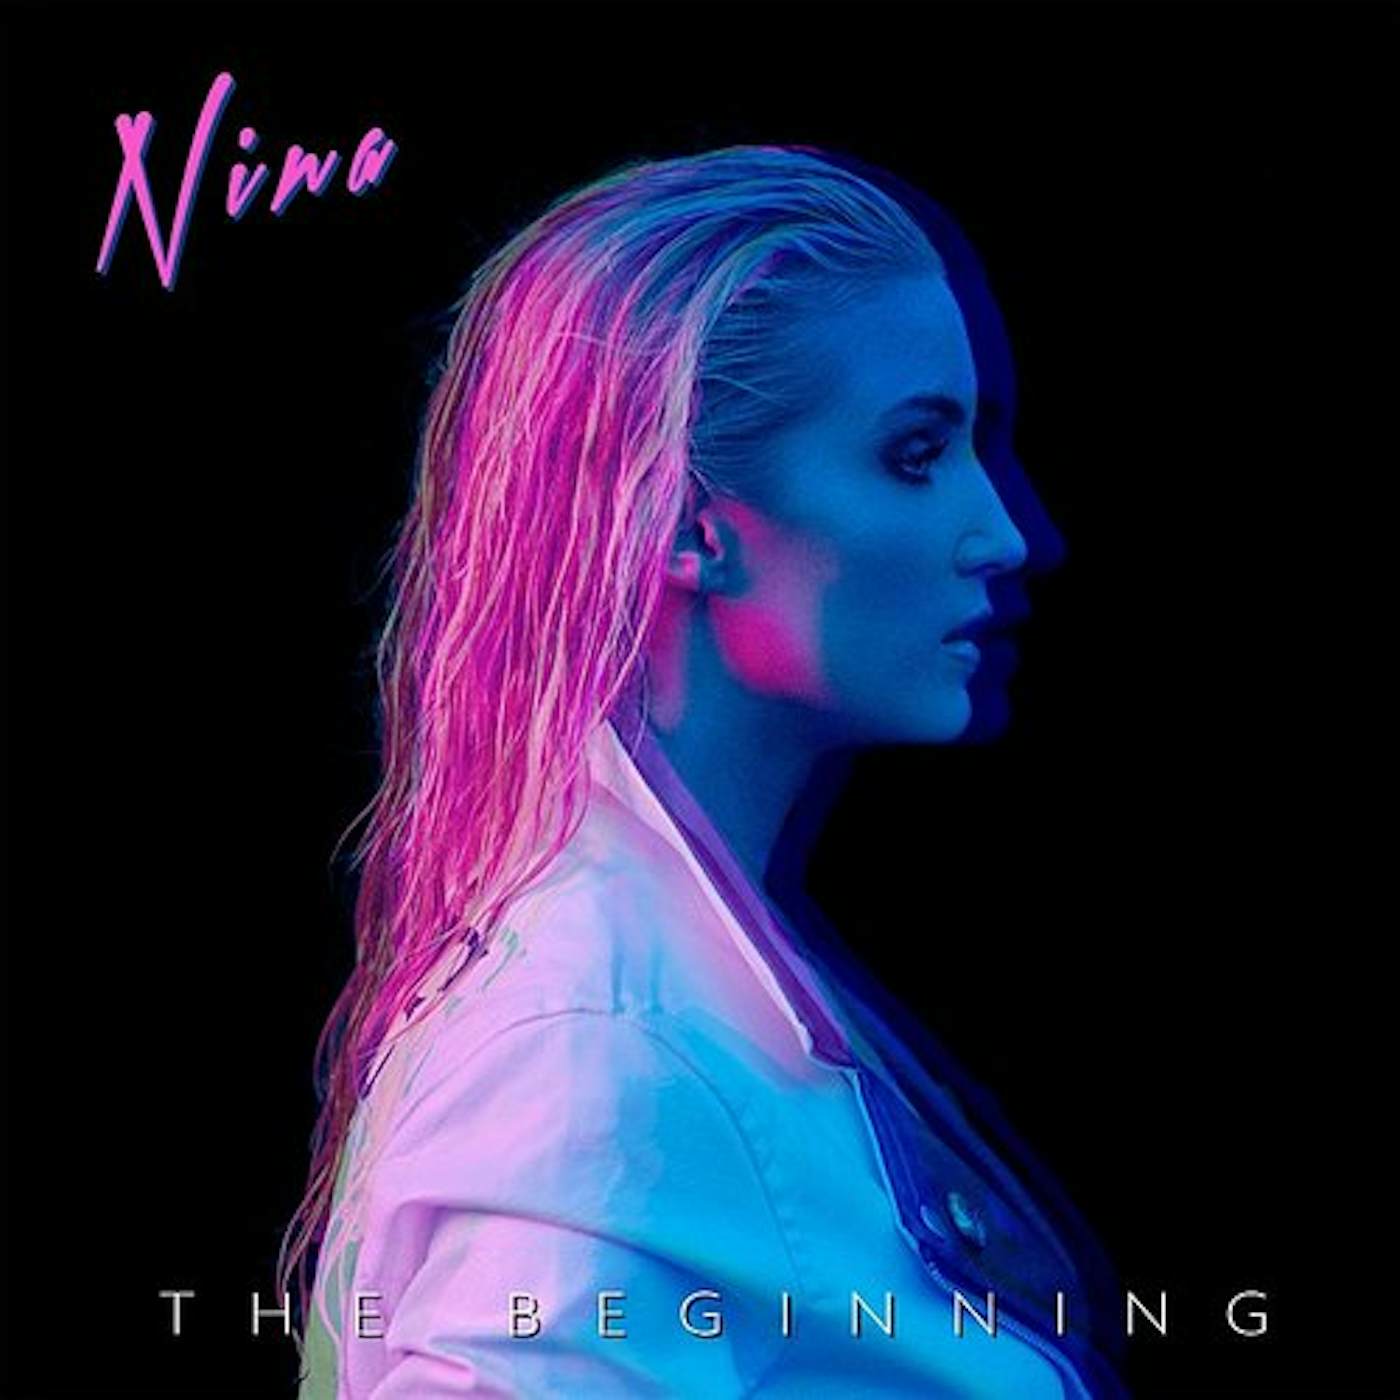 NINA BEGINNING Vinyl Record - Colored Vinyl, Red Vinyl, UK Release